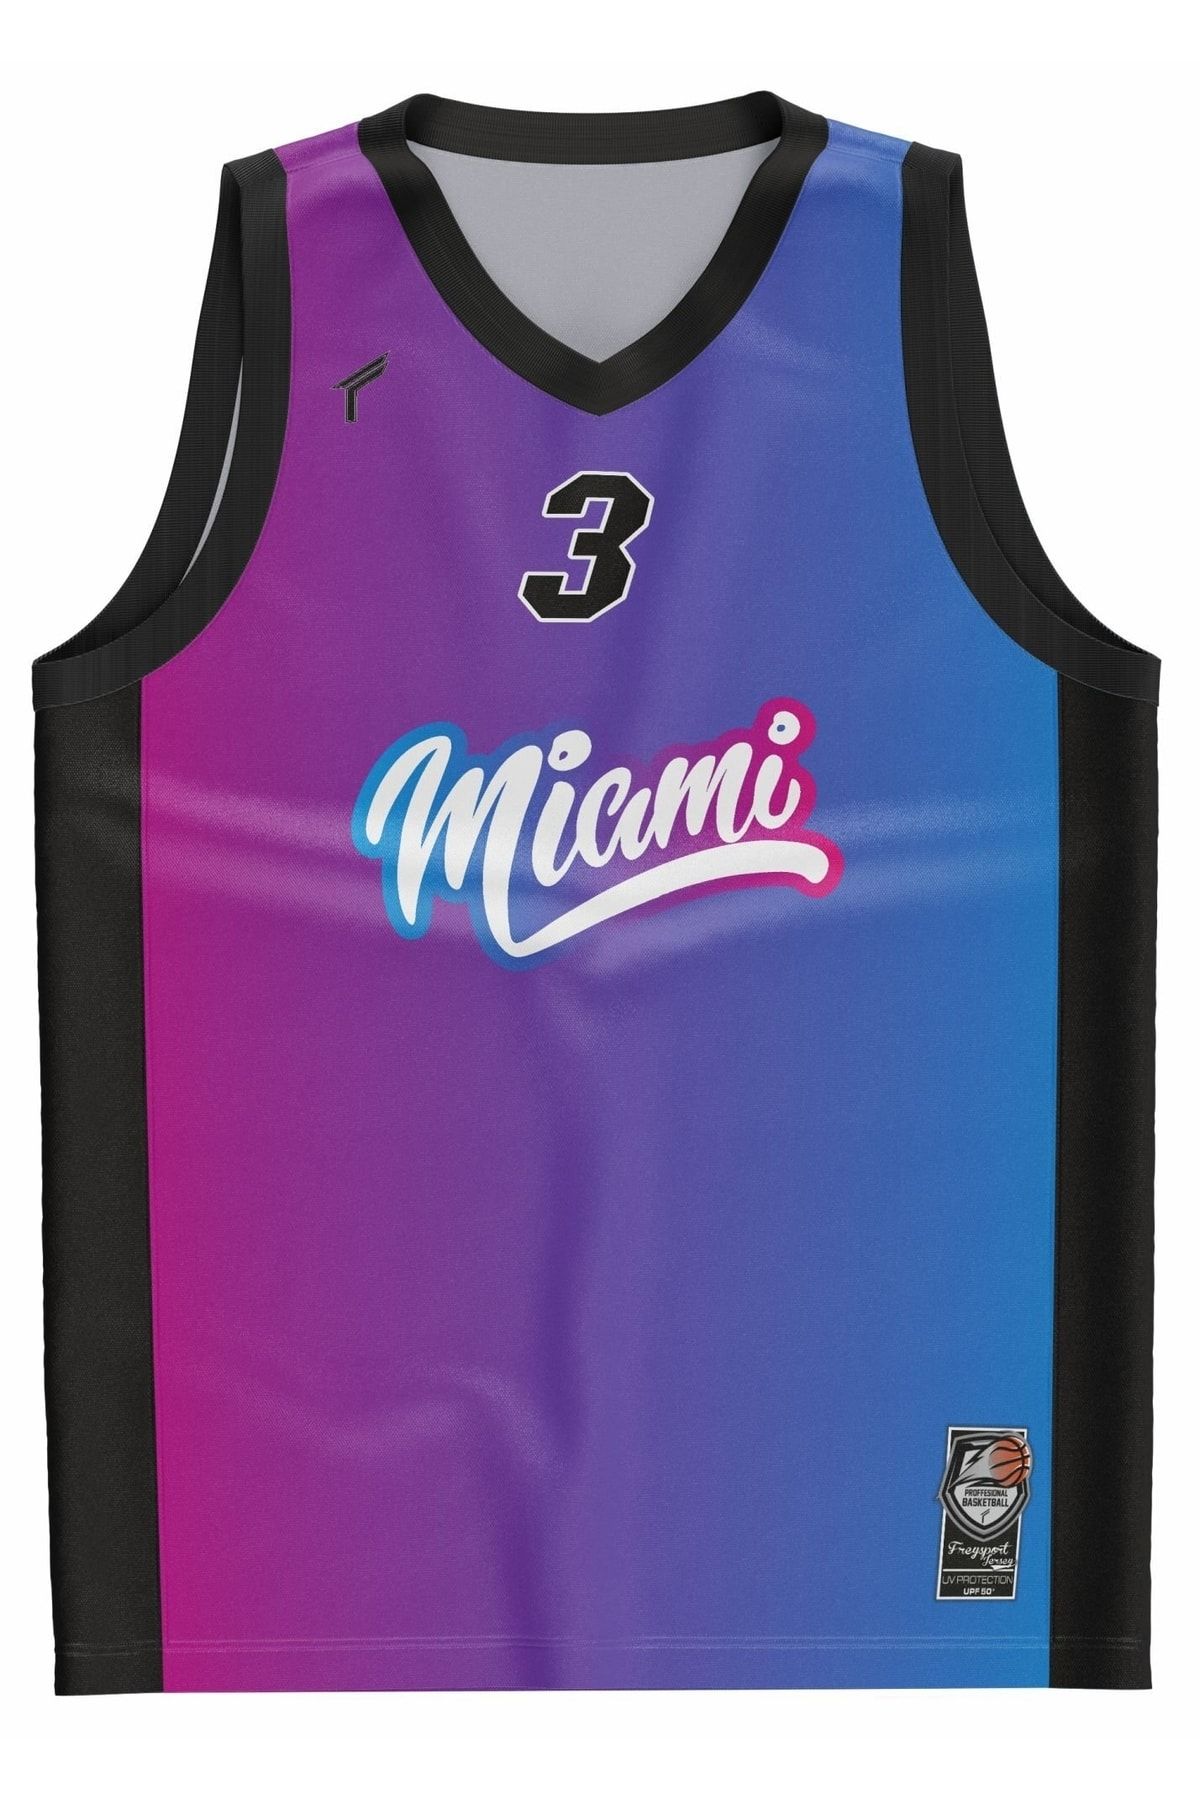 Freysport Miami Basketbol Forması